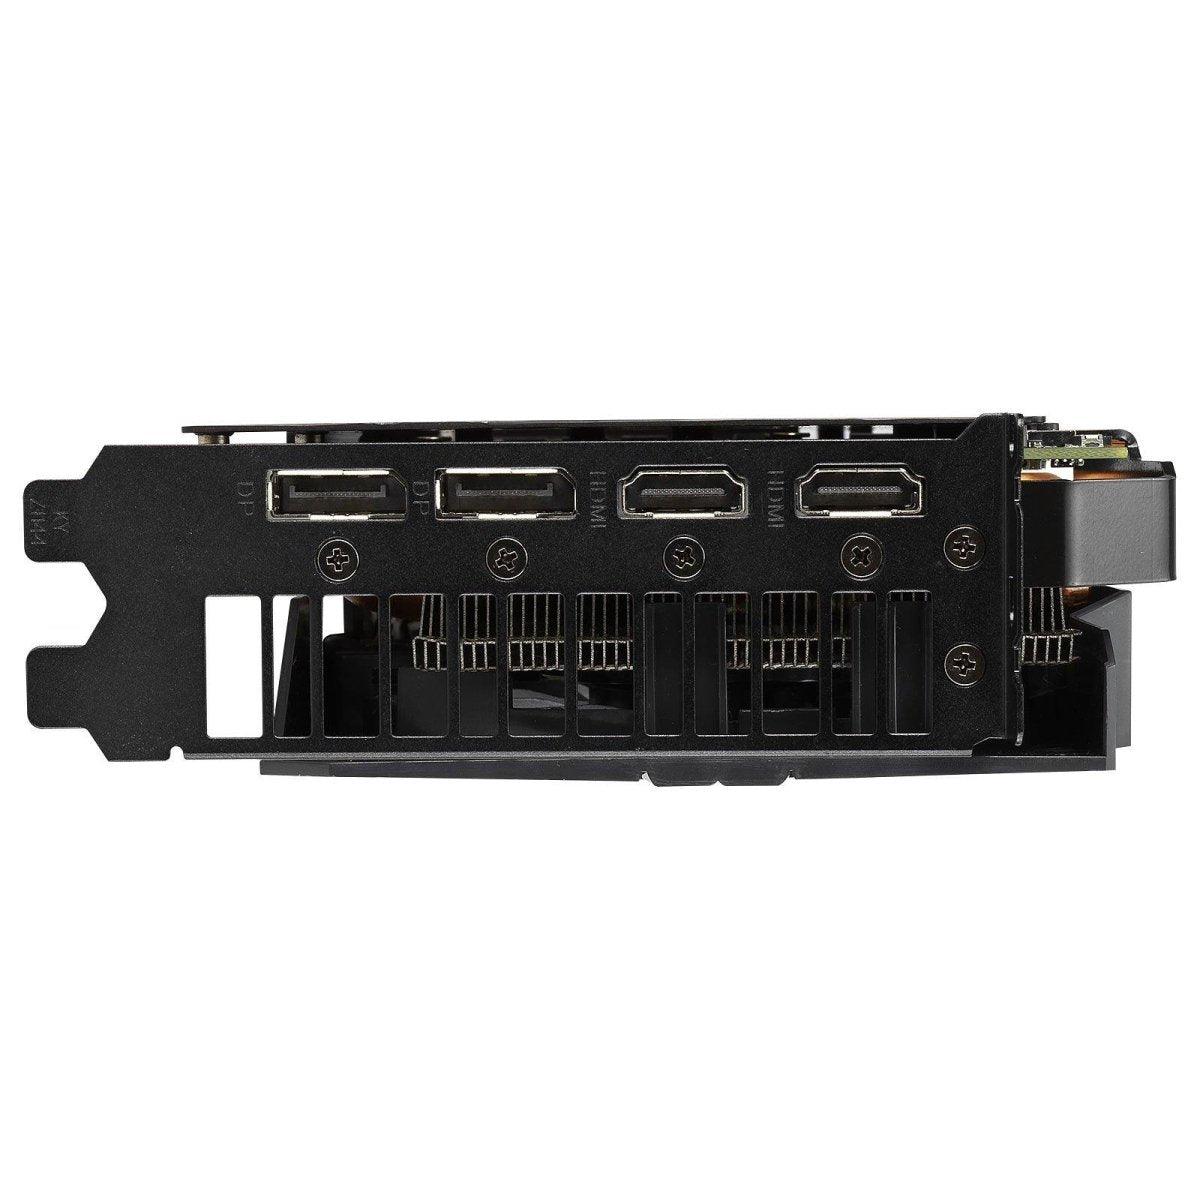 Asus GeForce GTX 1650 SUPER ROG-STRIX-GTX1650S-A4G-GAMING Maroc Prix pas cher - smartmarket.ma